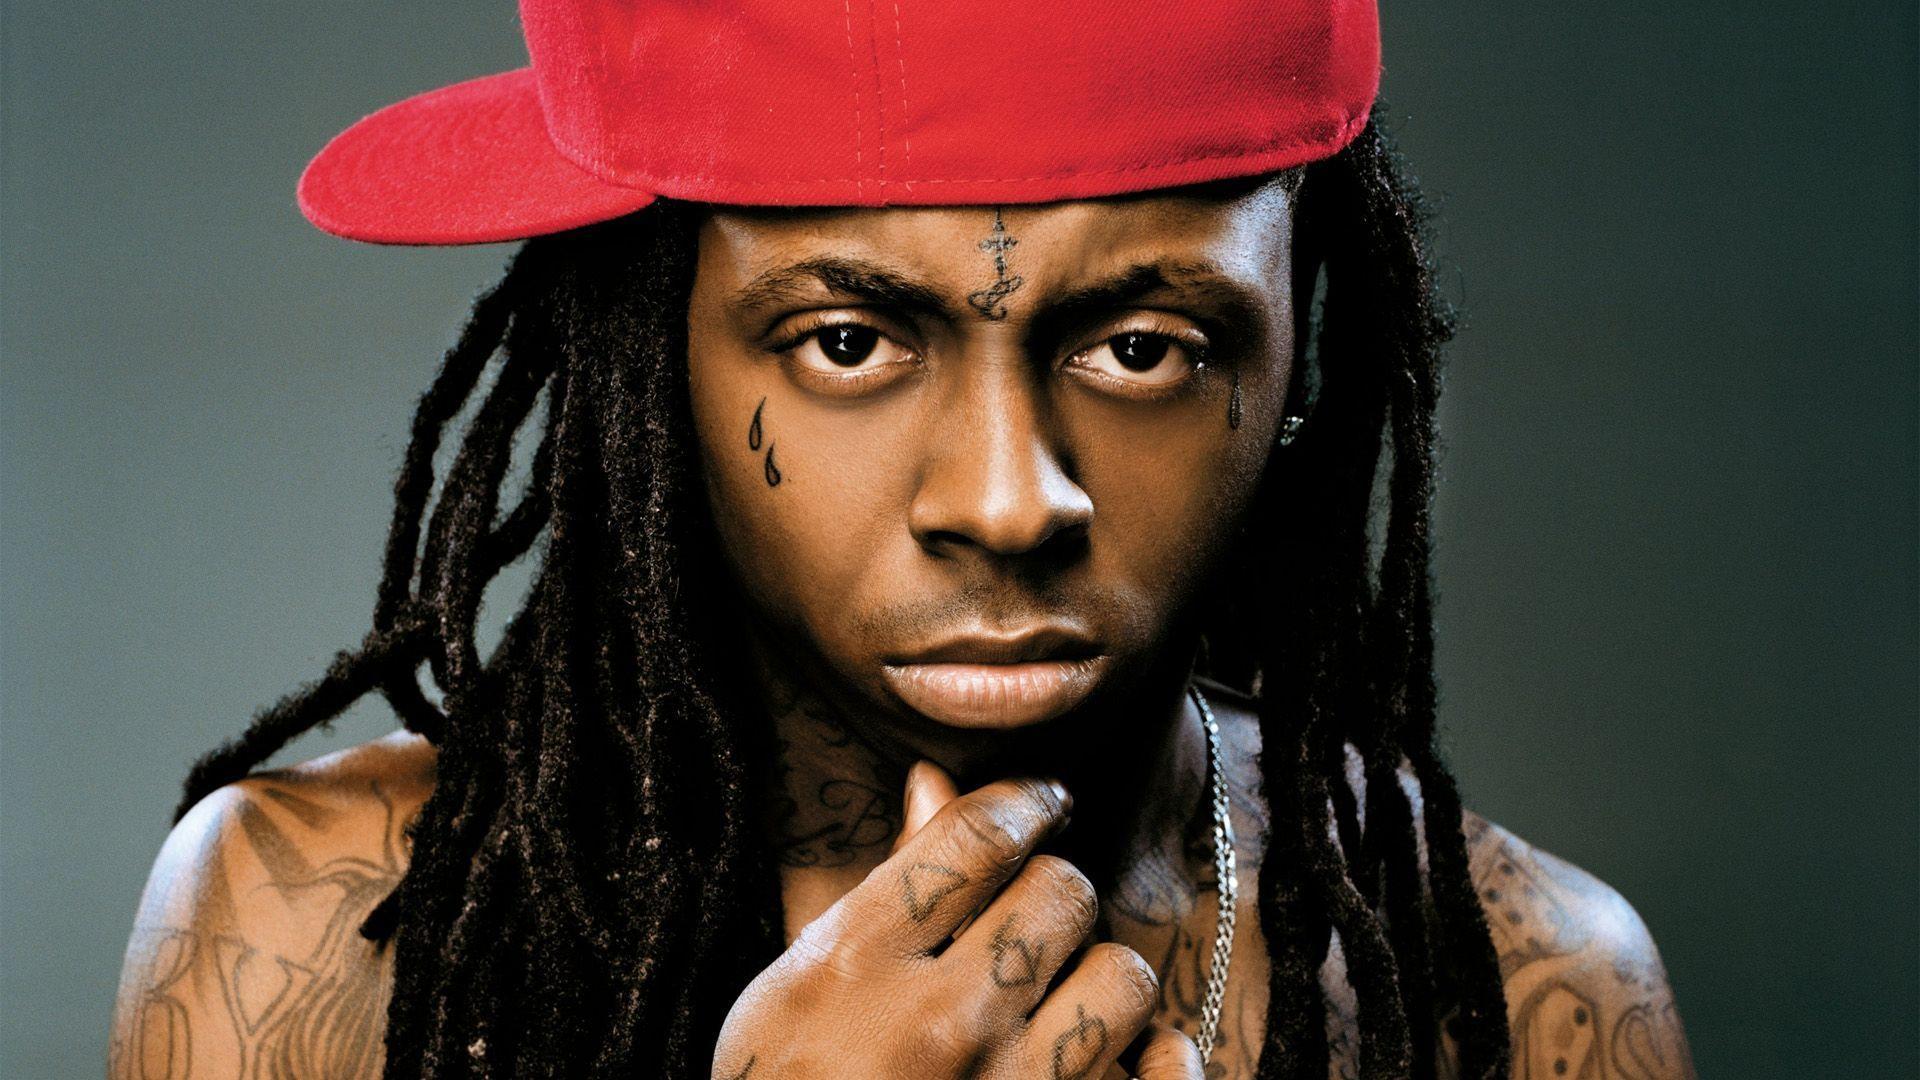 Lil Wayne Wallpaper Free Download id: 10064e